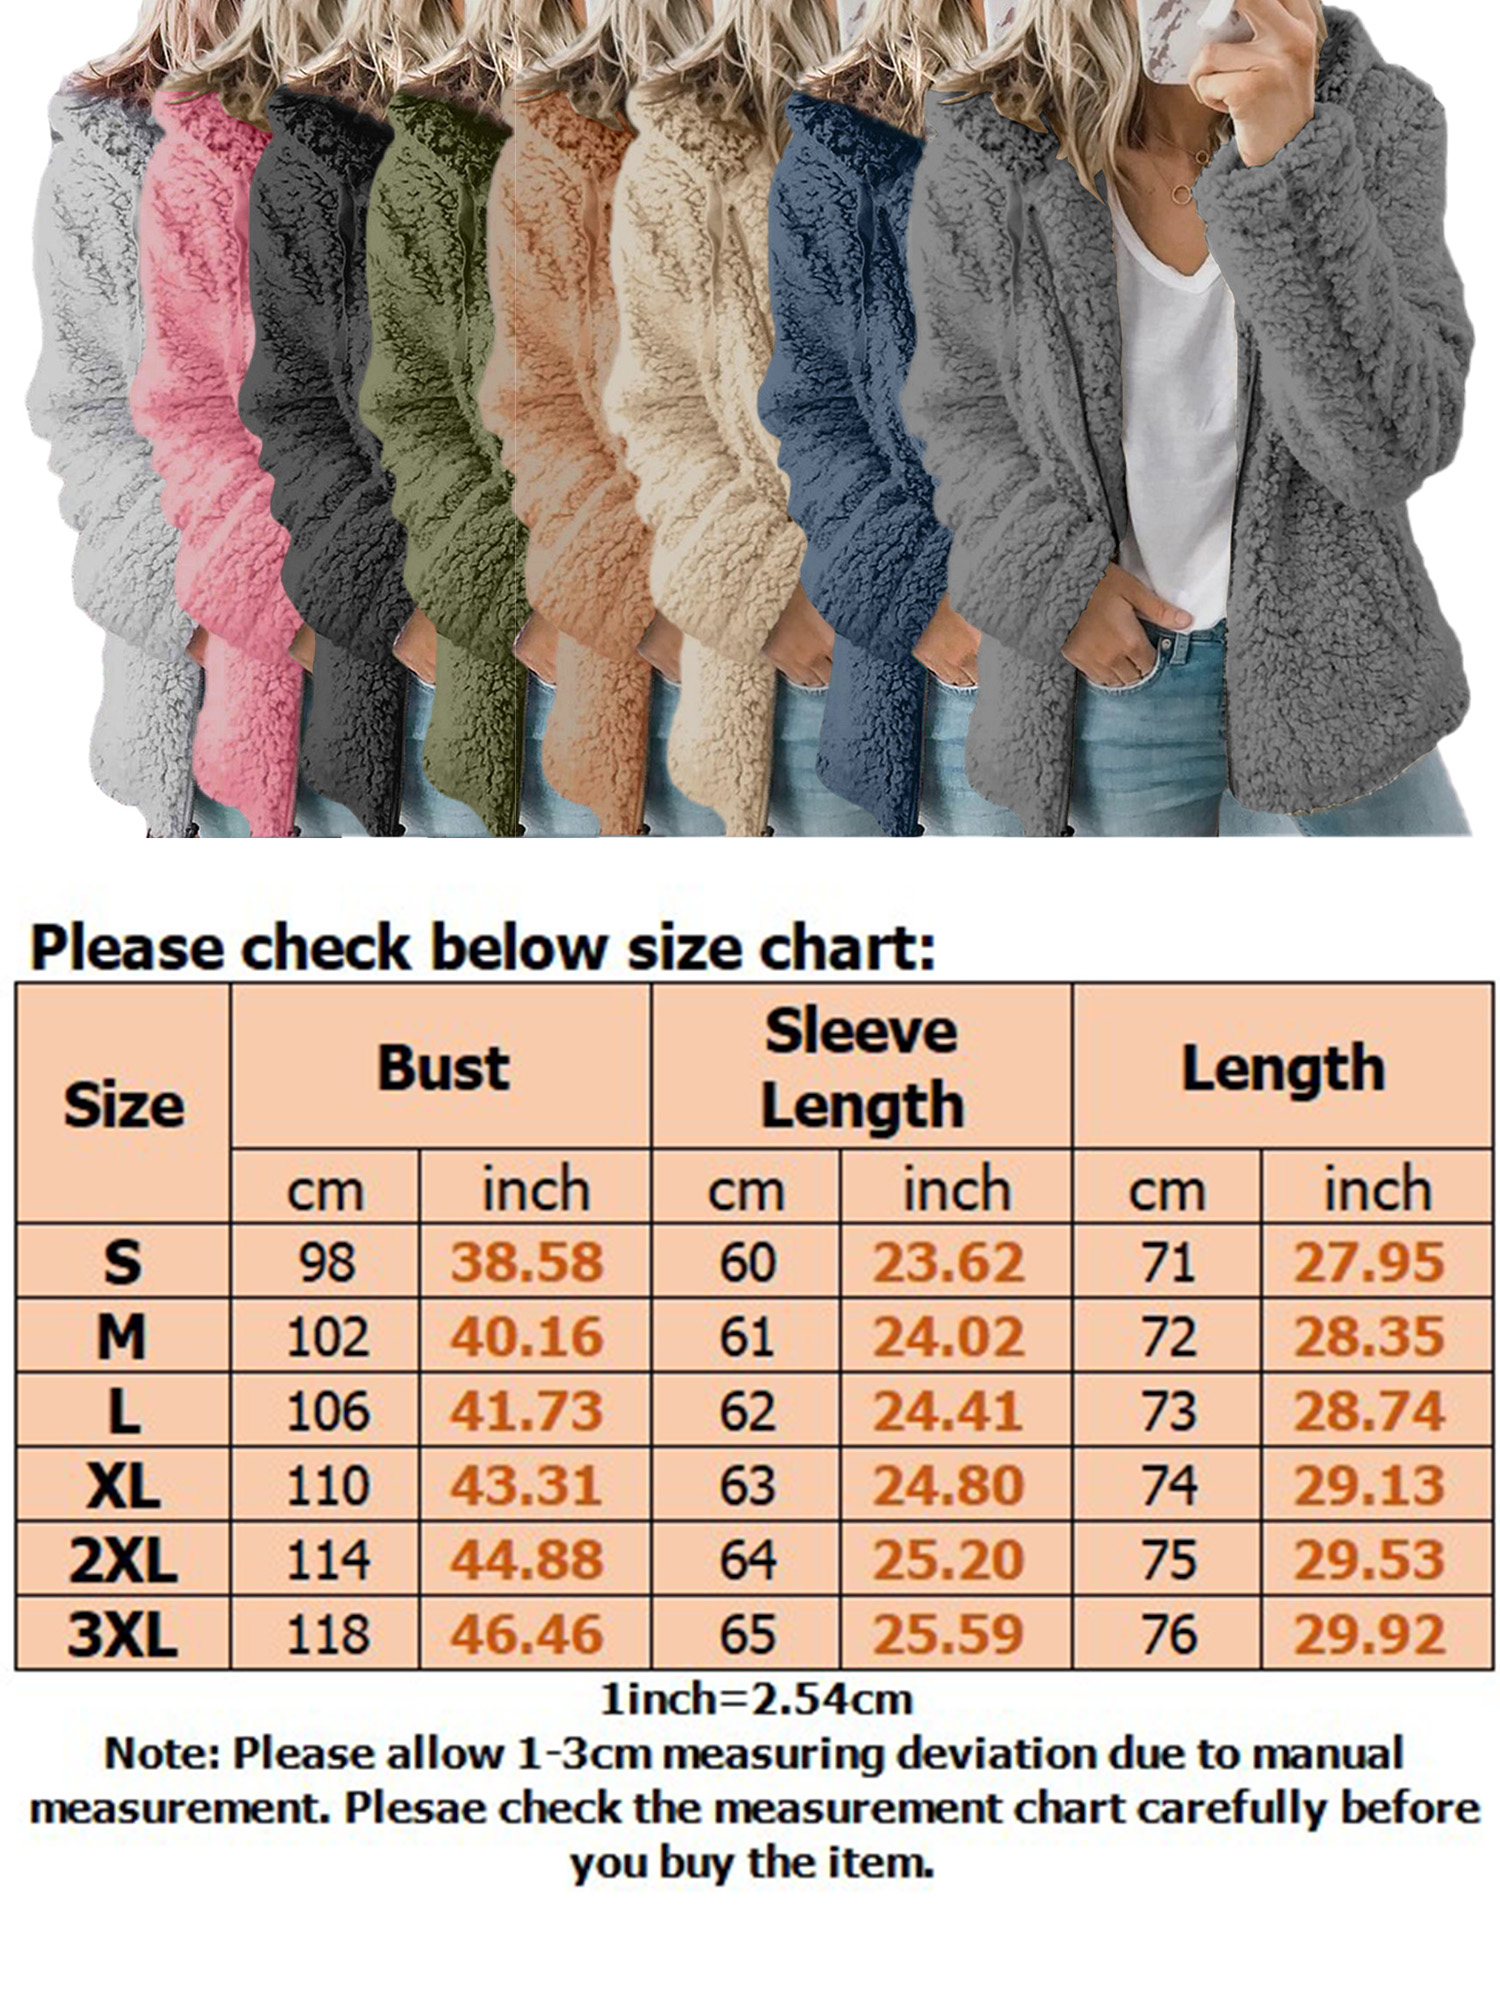 HIMONE Long Sleeve Outerwear for Women Casual Fulffy Fleece Jacket Zip Up Plush Faux Fur Coat Cardigans Hoodies - image 2 of 2